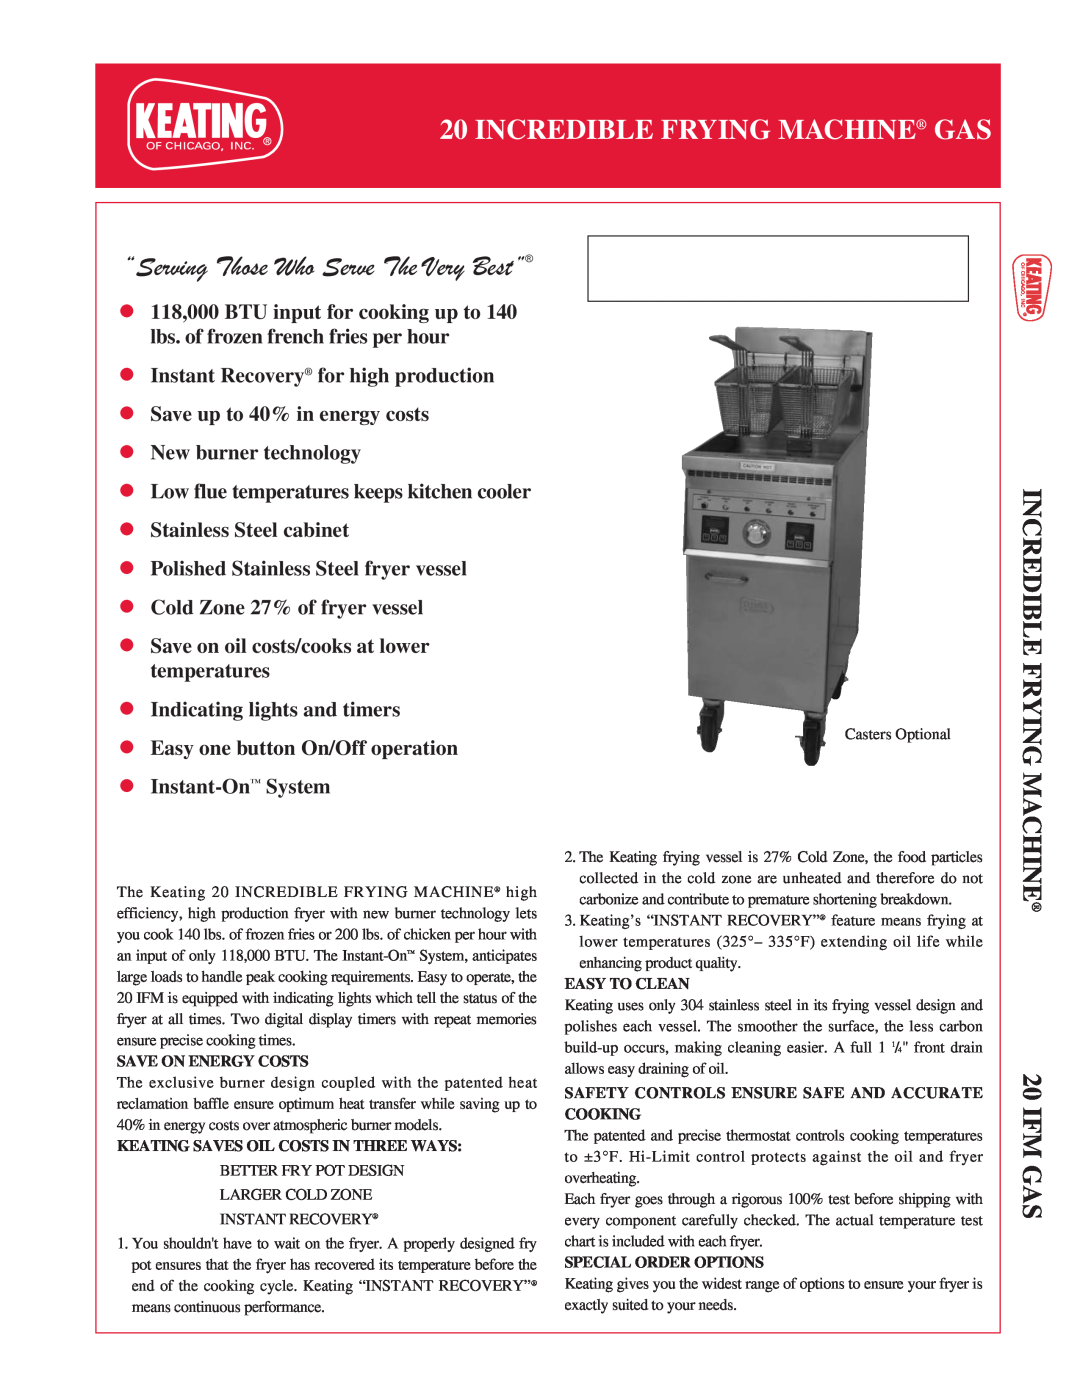 Keating Of Chicago manual Incredible Frying Machine Gas, INCREDIBLE FRYING MACHINE 20 IFM GAS 